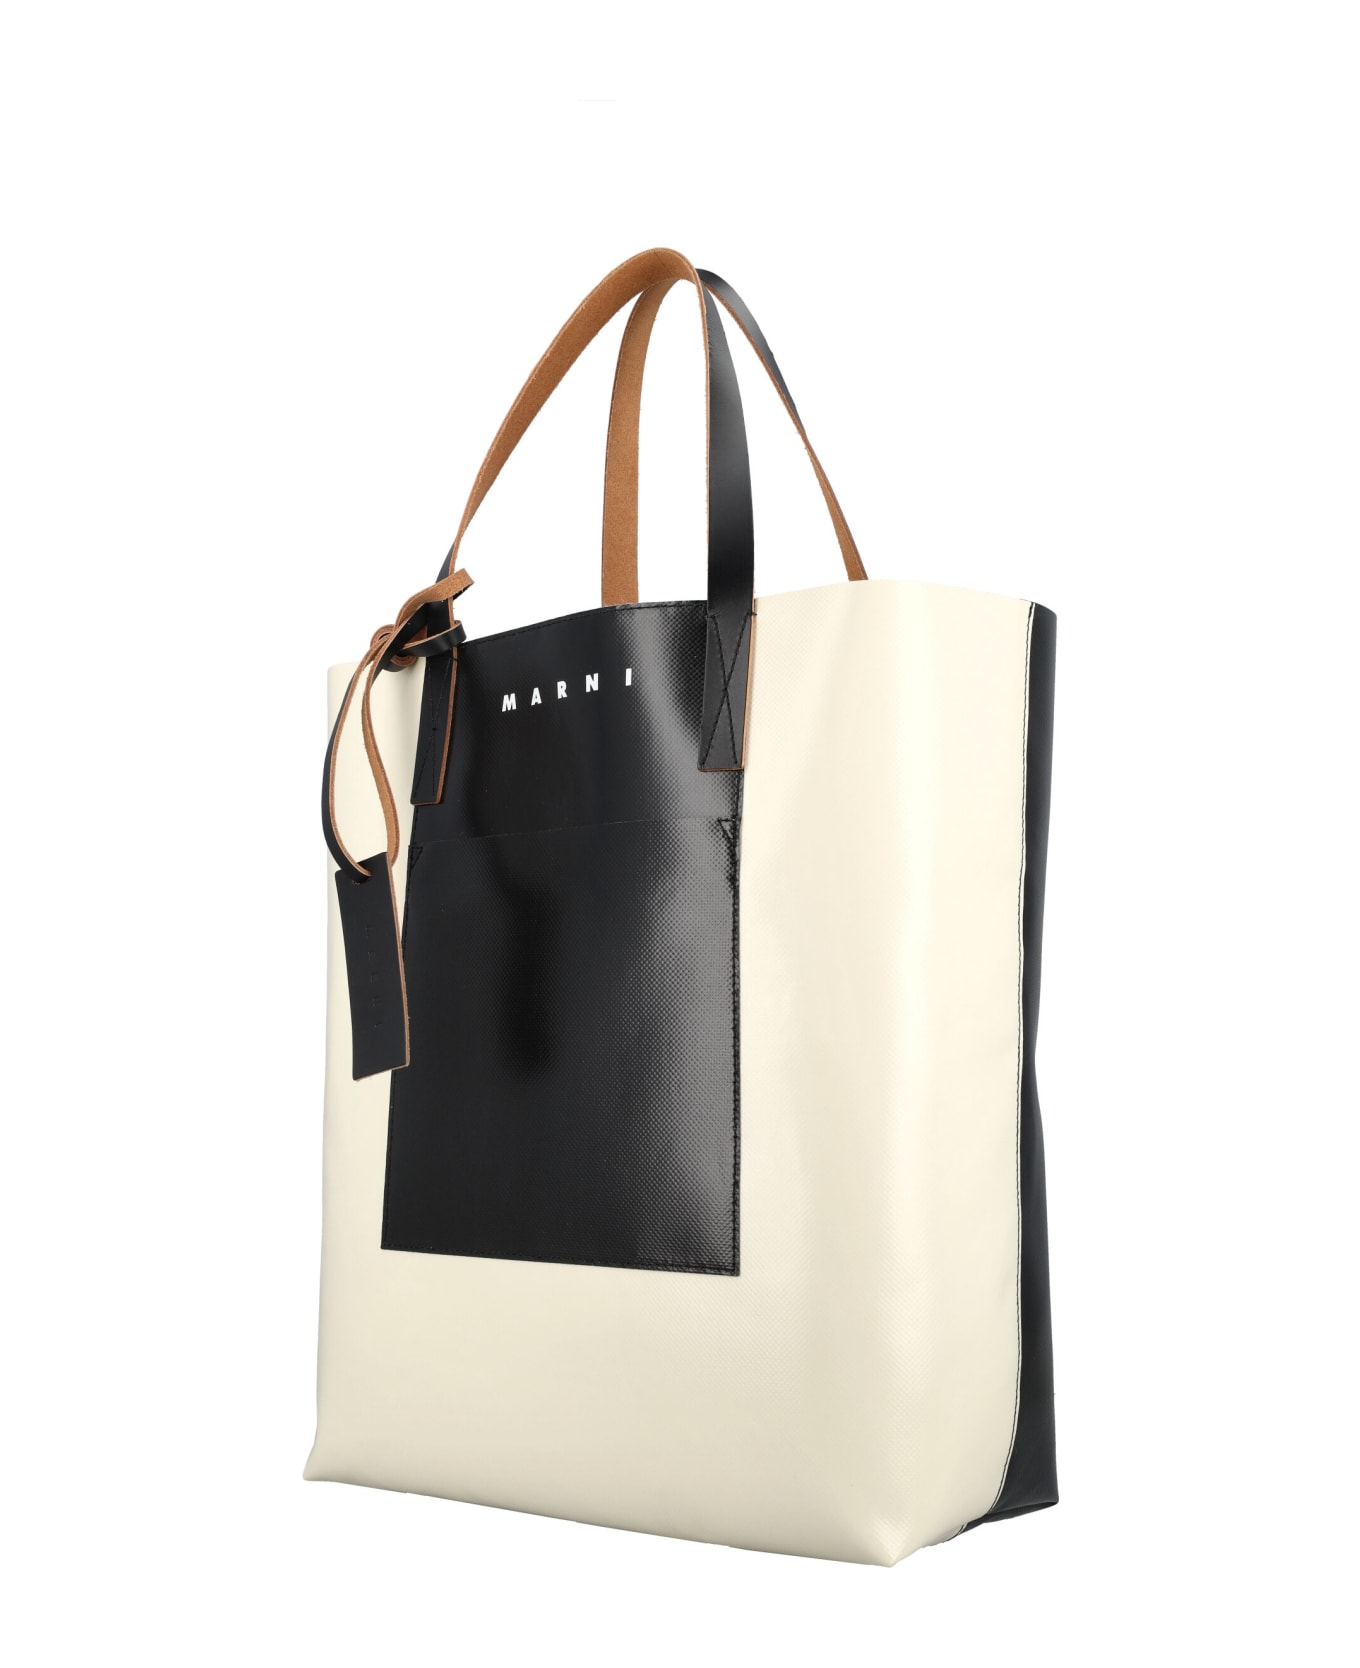 Marni Tribeca Shopping Bag - WHITE BLACK